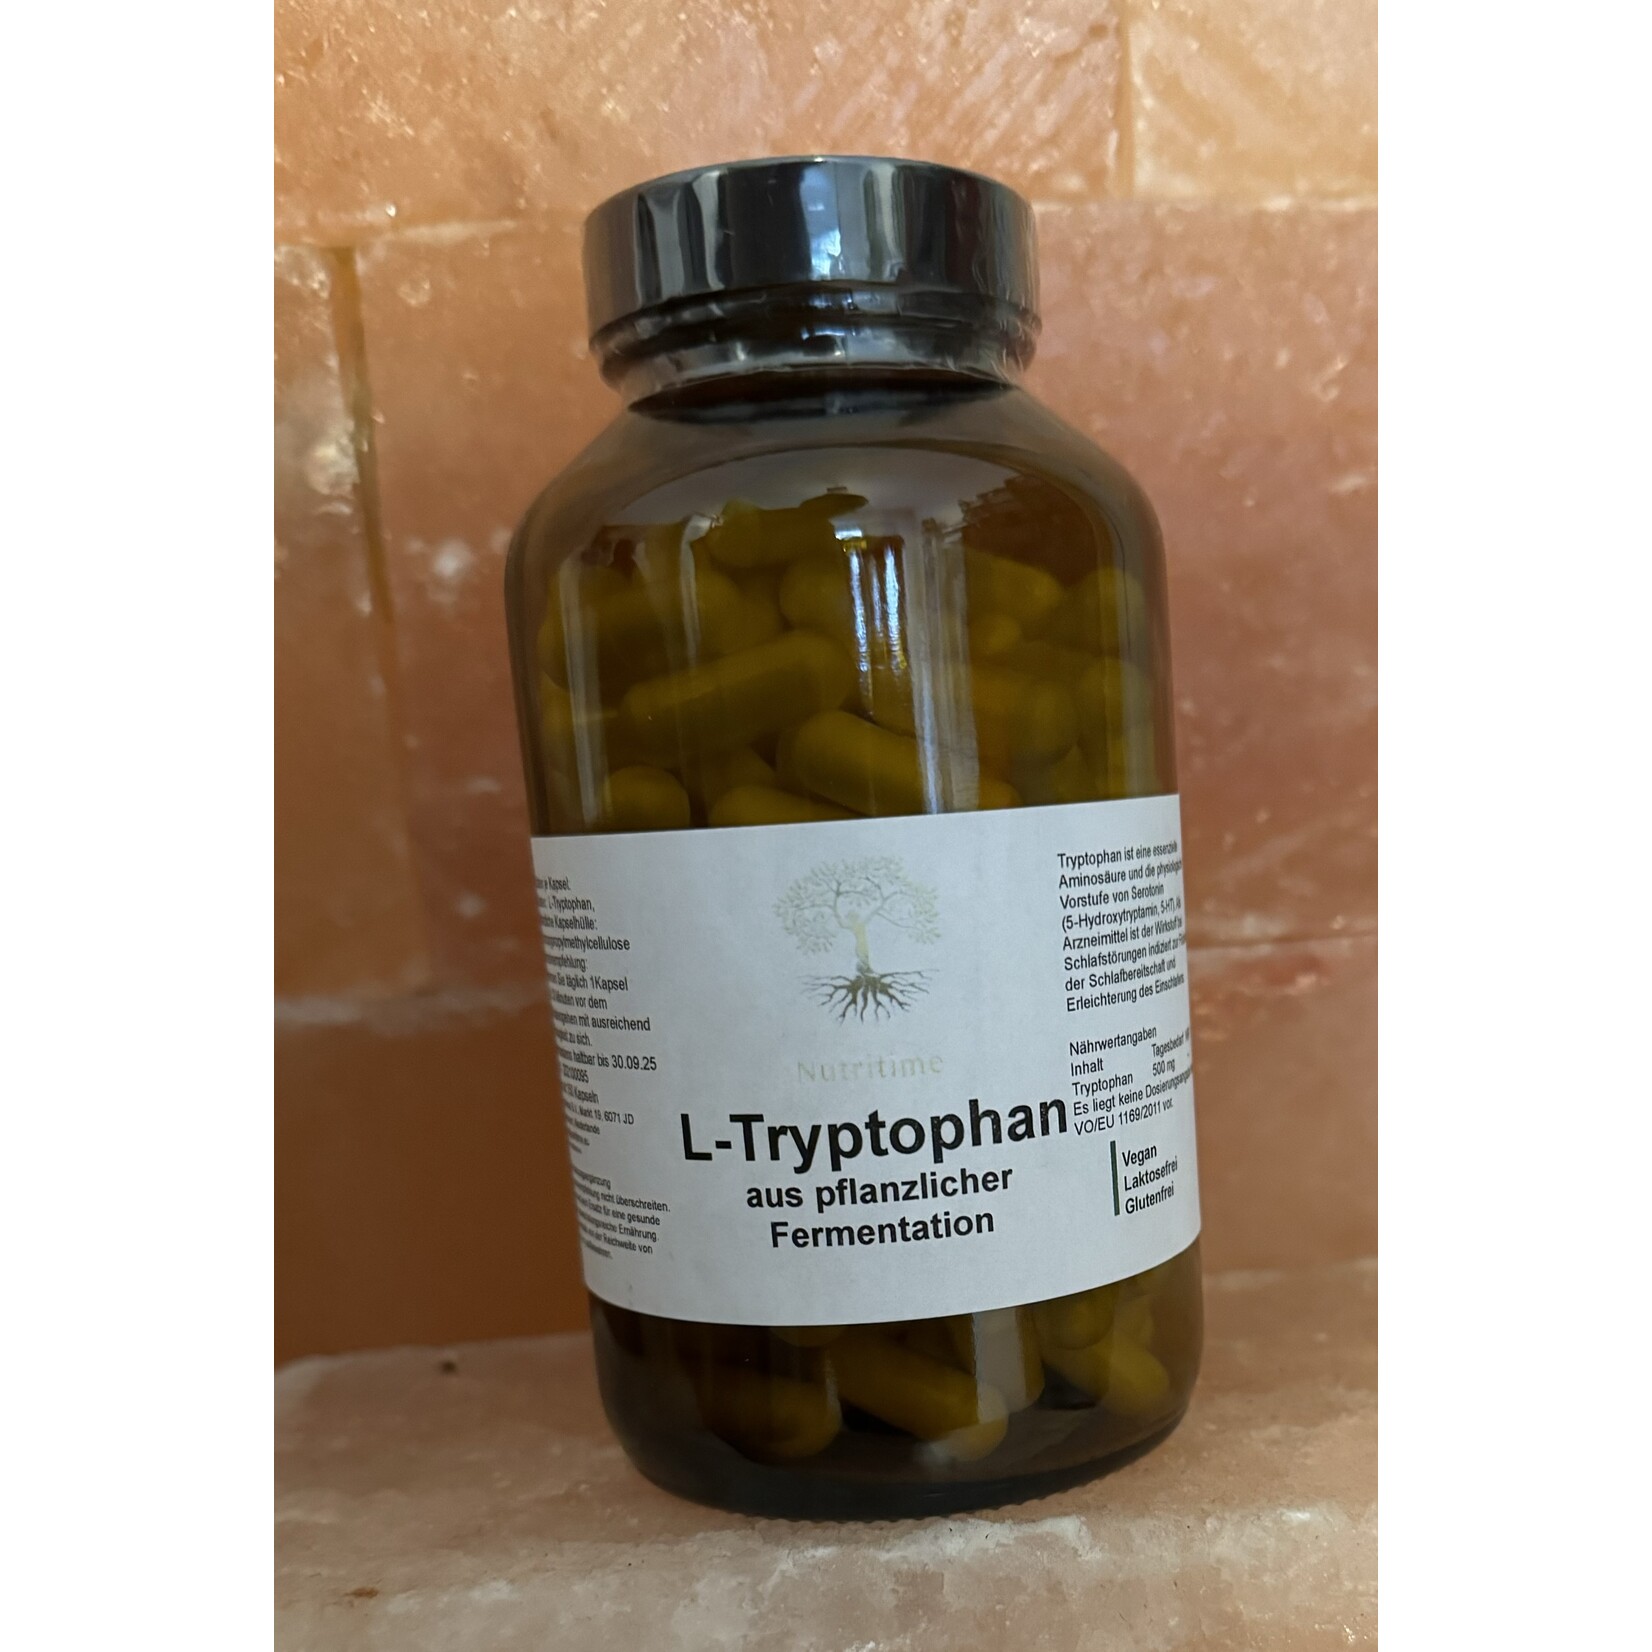 Norsan L-Tryptophan - aus pflanzlicher Fermentation